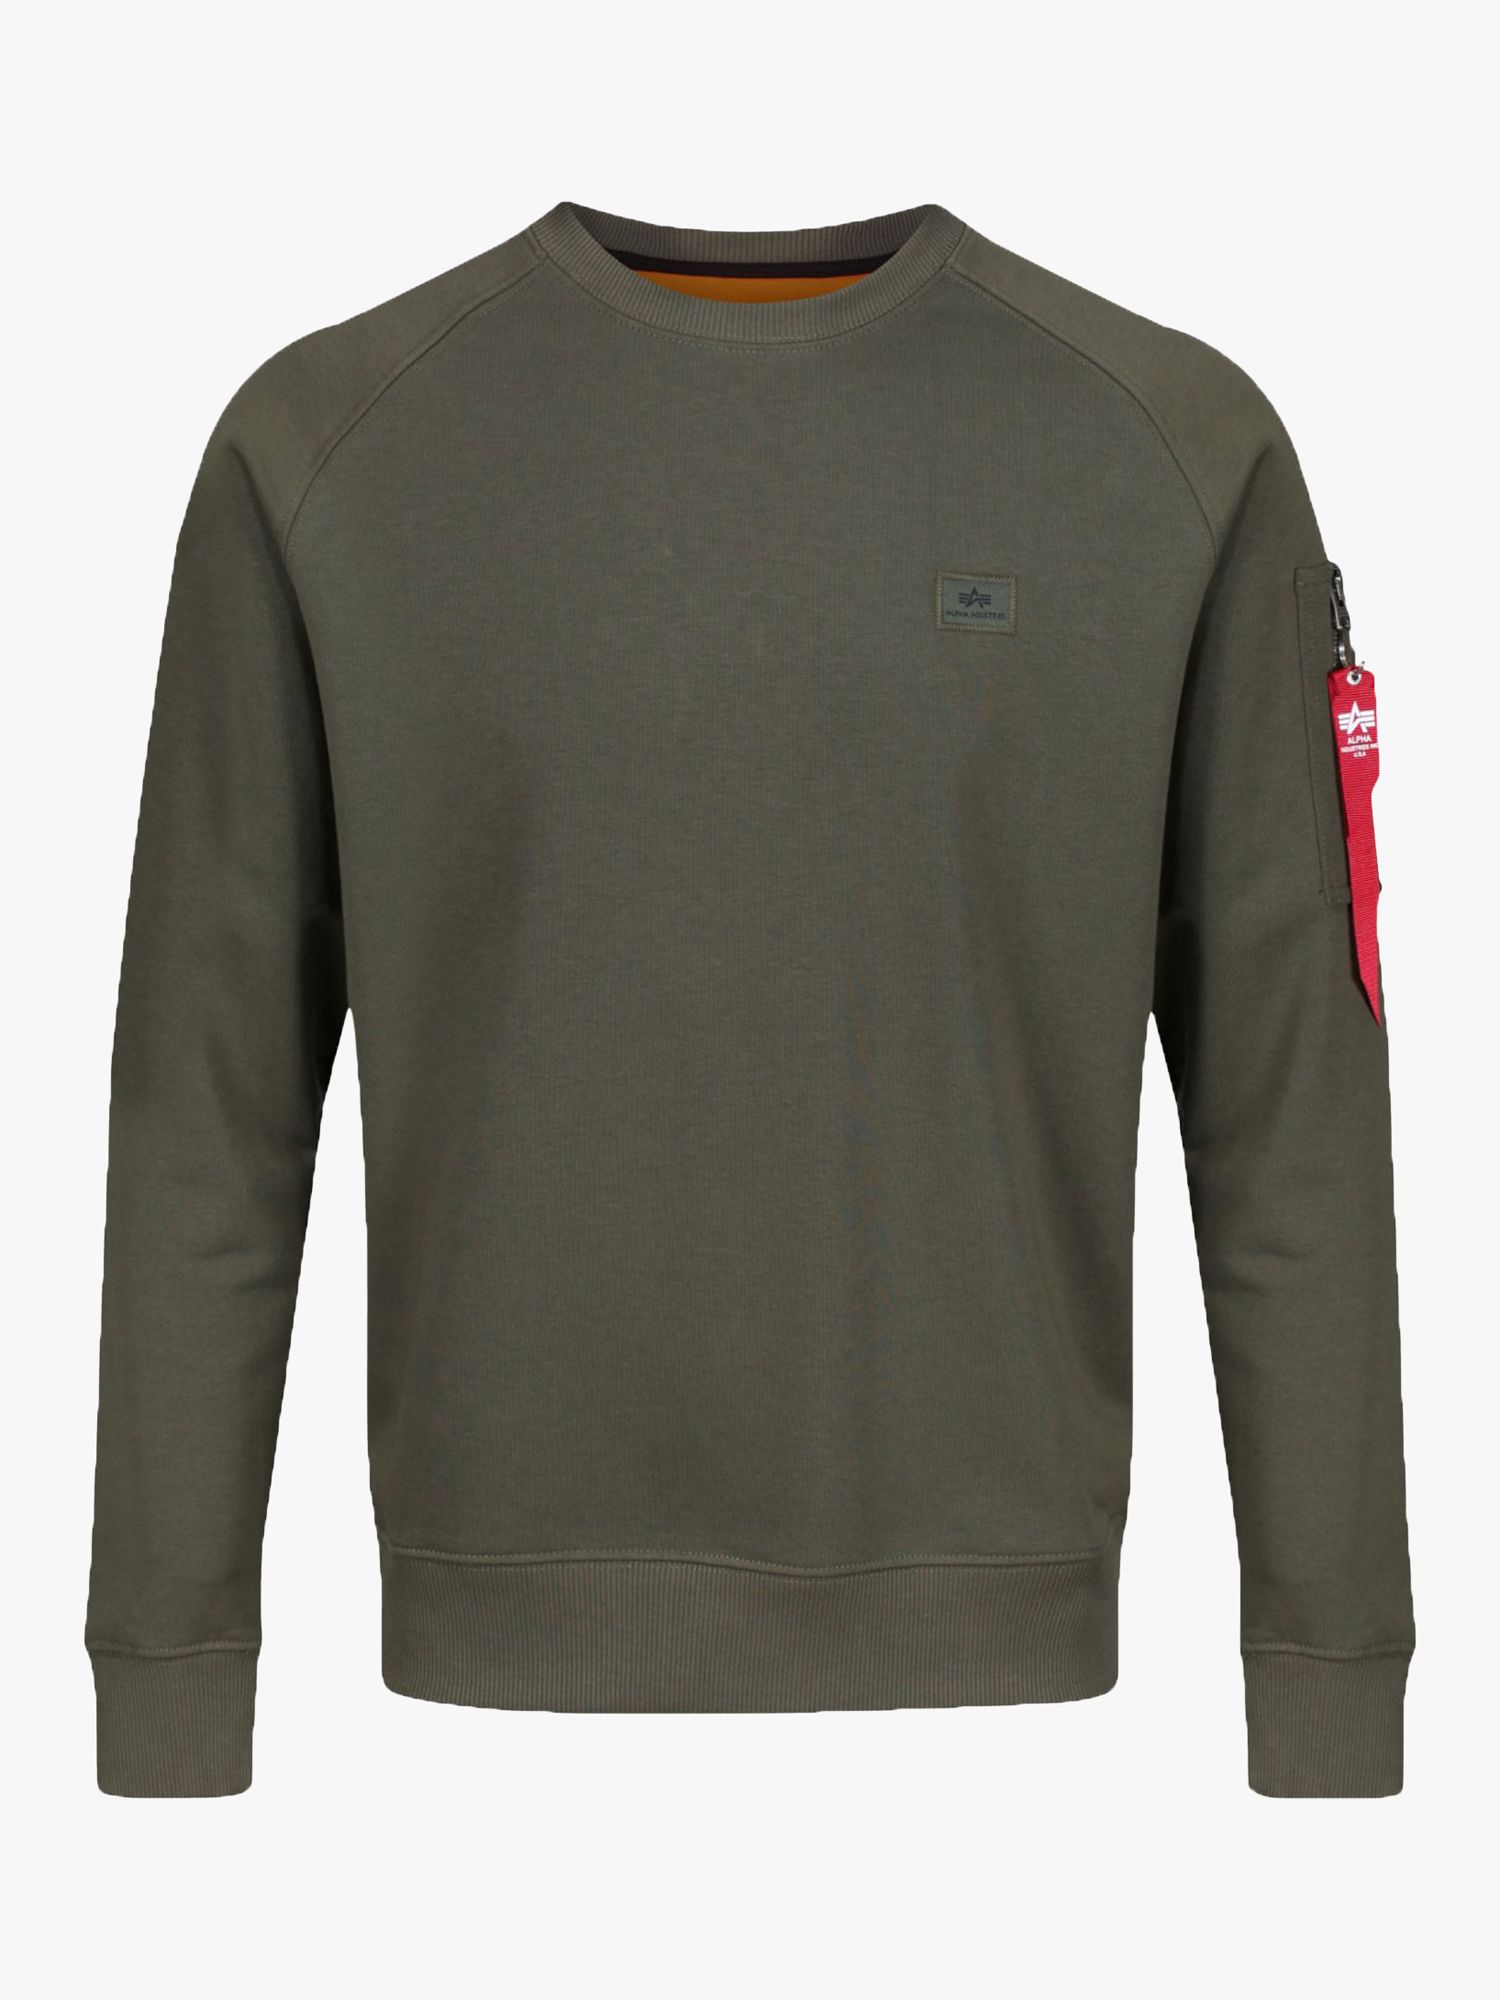 Green & Lewis Alpha Industries Zip Sleeve John at Dark Partners 257 Pocket Sweatshirt, X-Fit